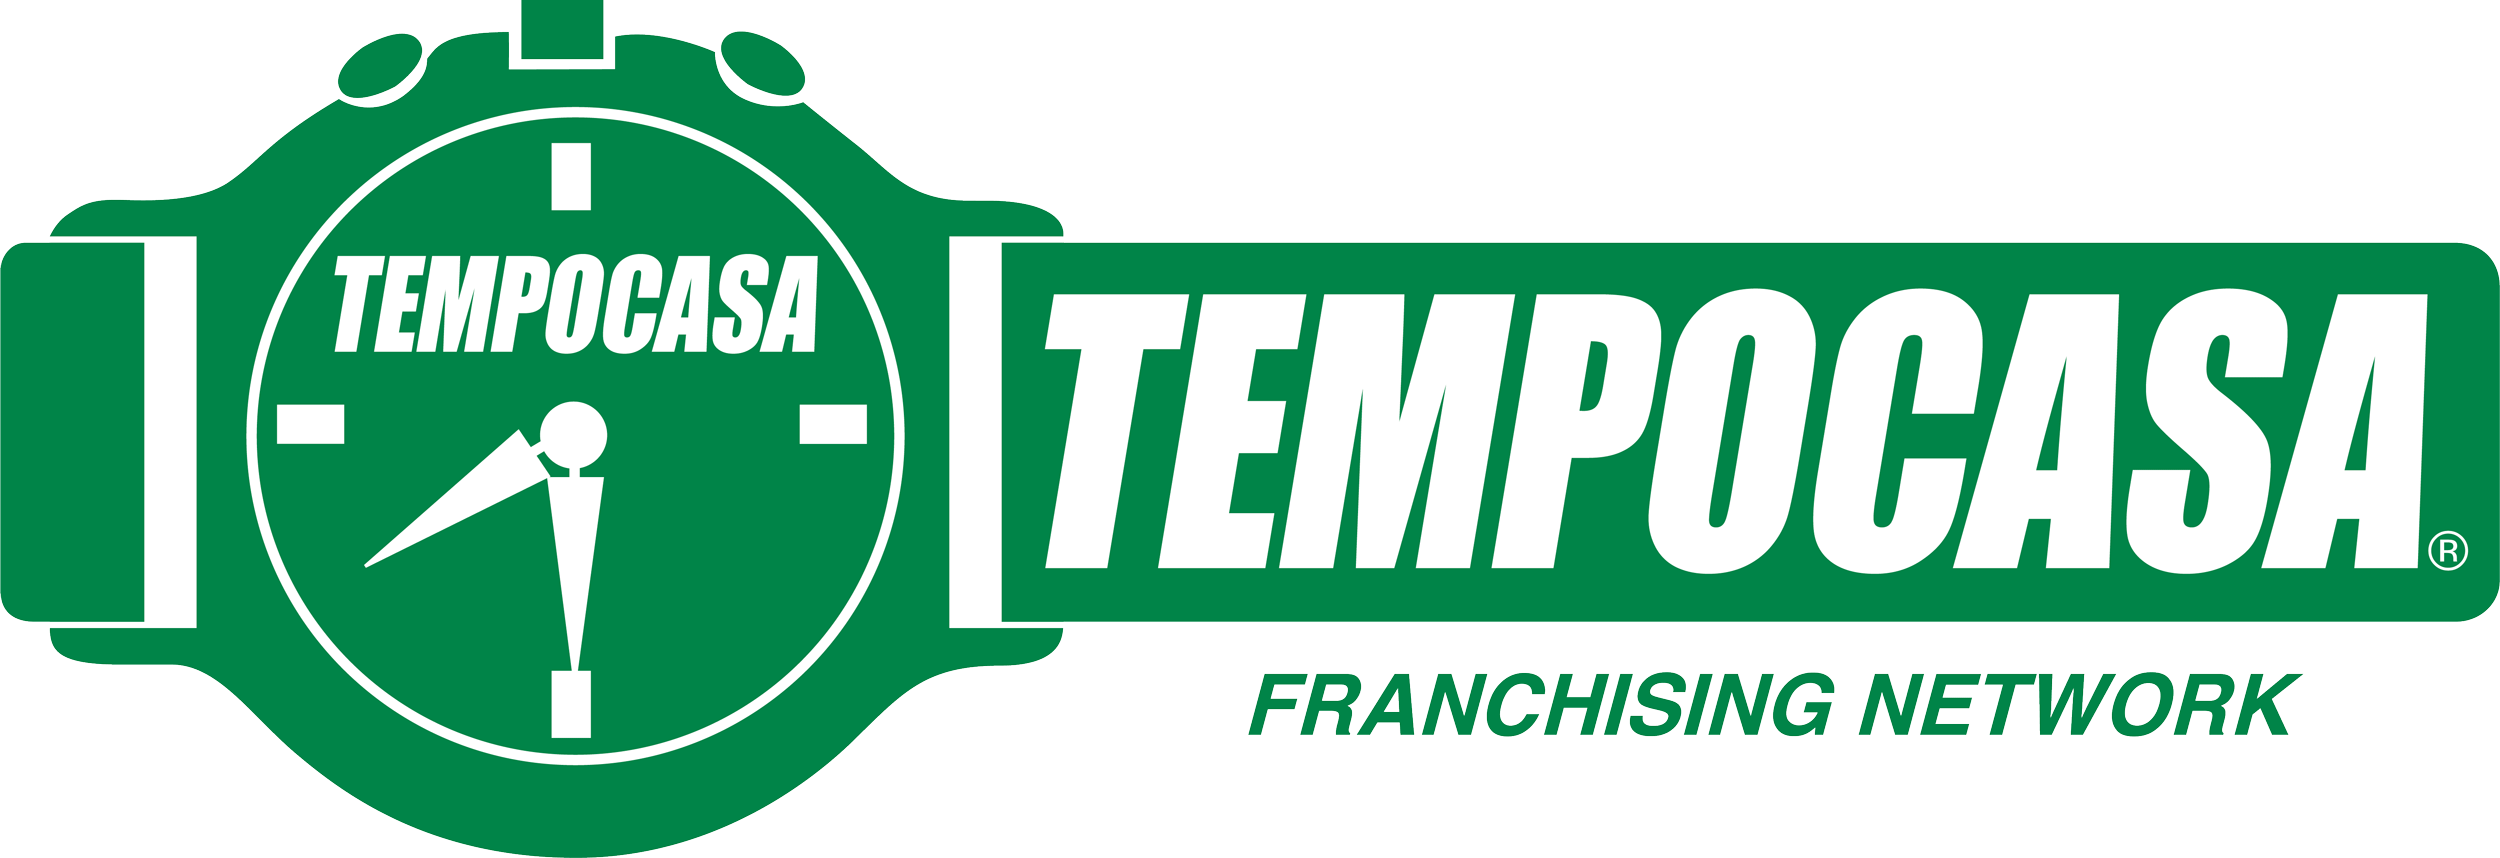 Tempoaffitti - Milano/Piola - Tempocasa